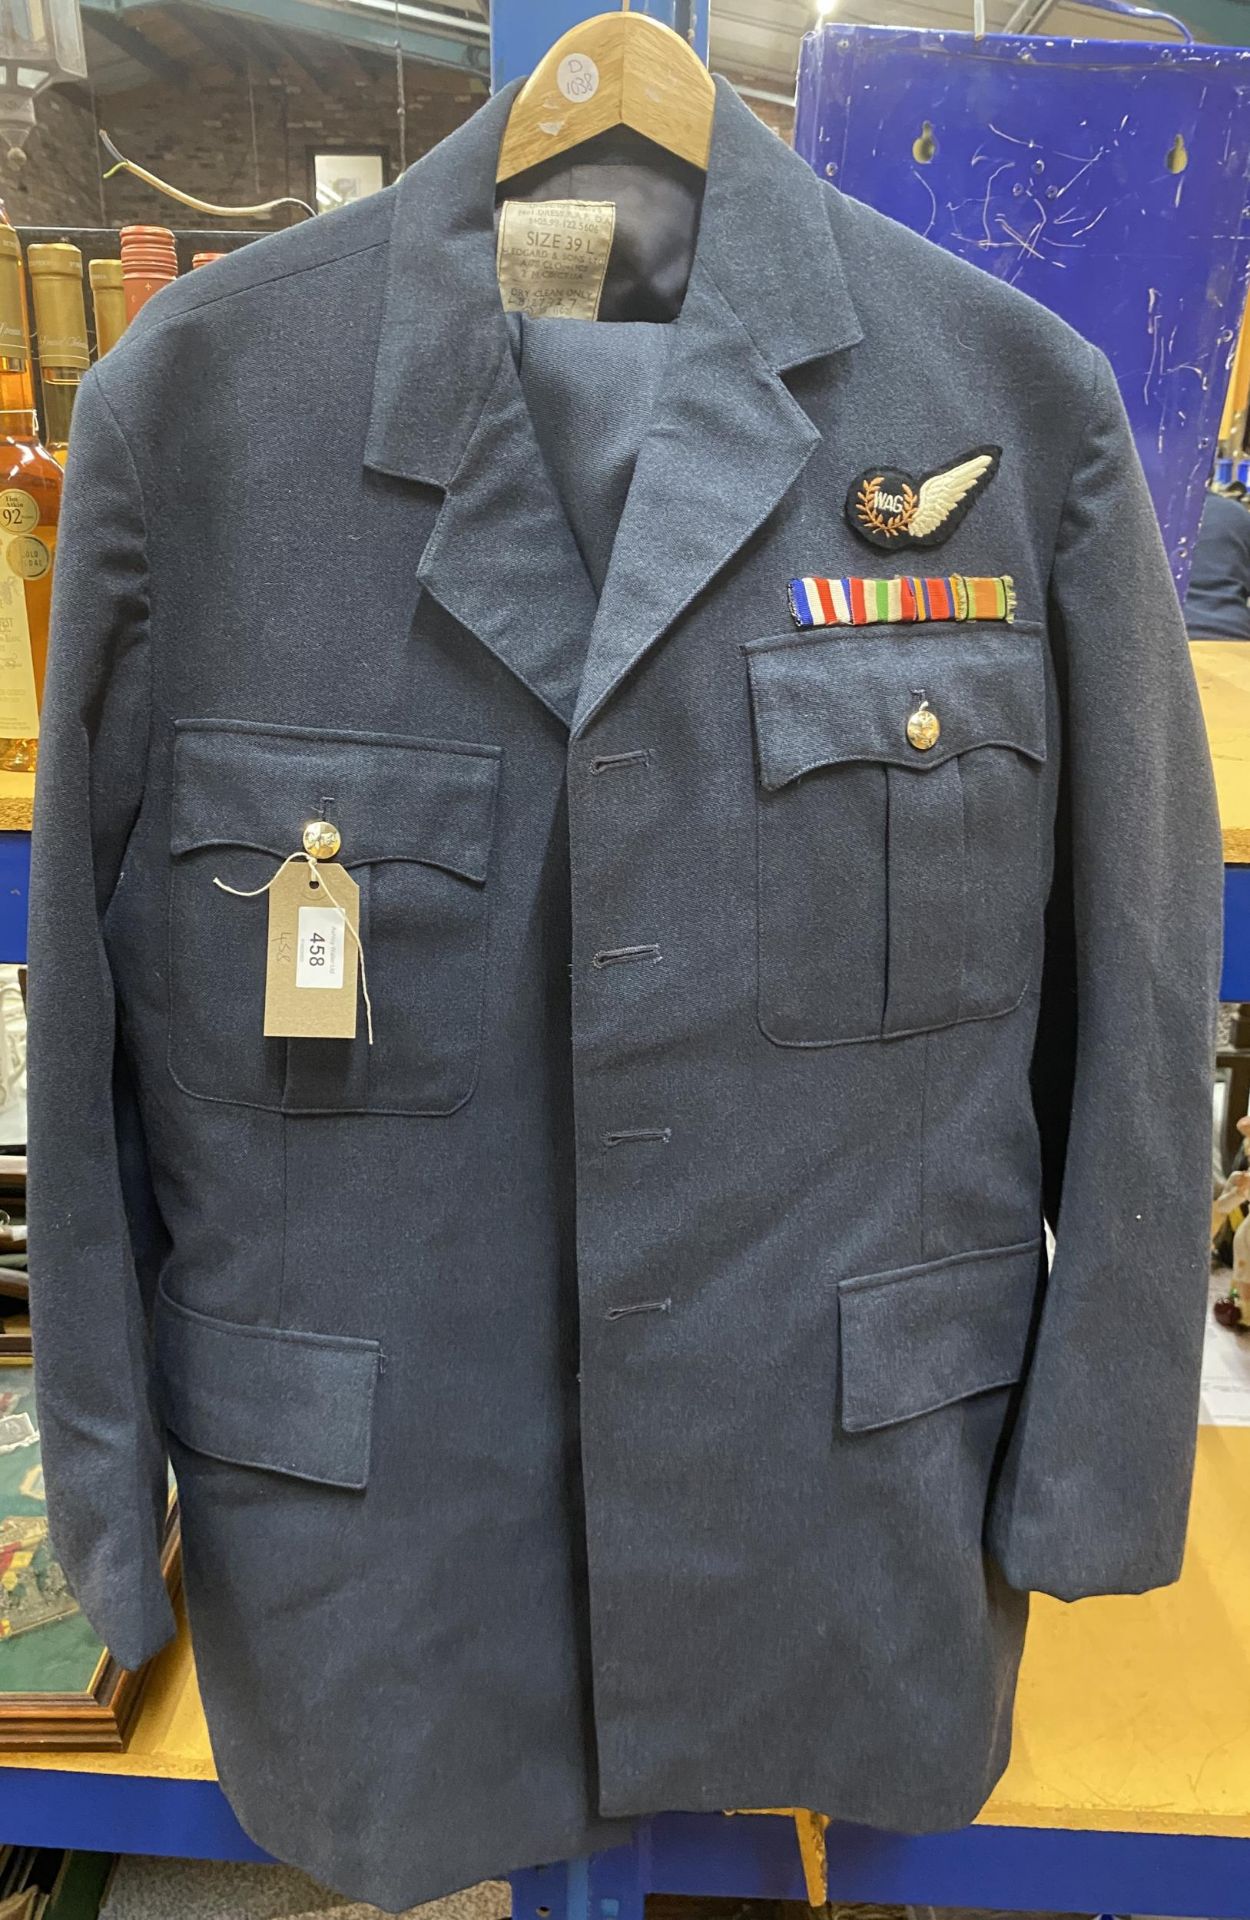 A RAF MANS NO.1 DRESS UNIFORM, JACKET SIZE 39l, COMPRISING JACKET AND TROUSERS